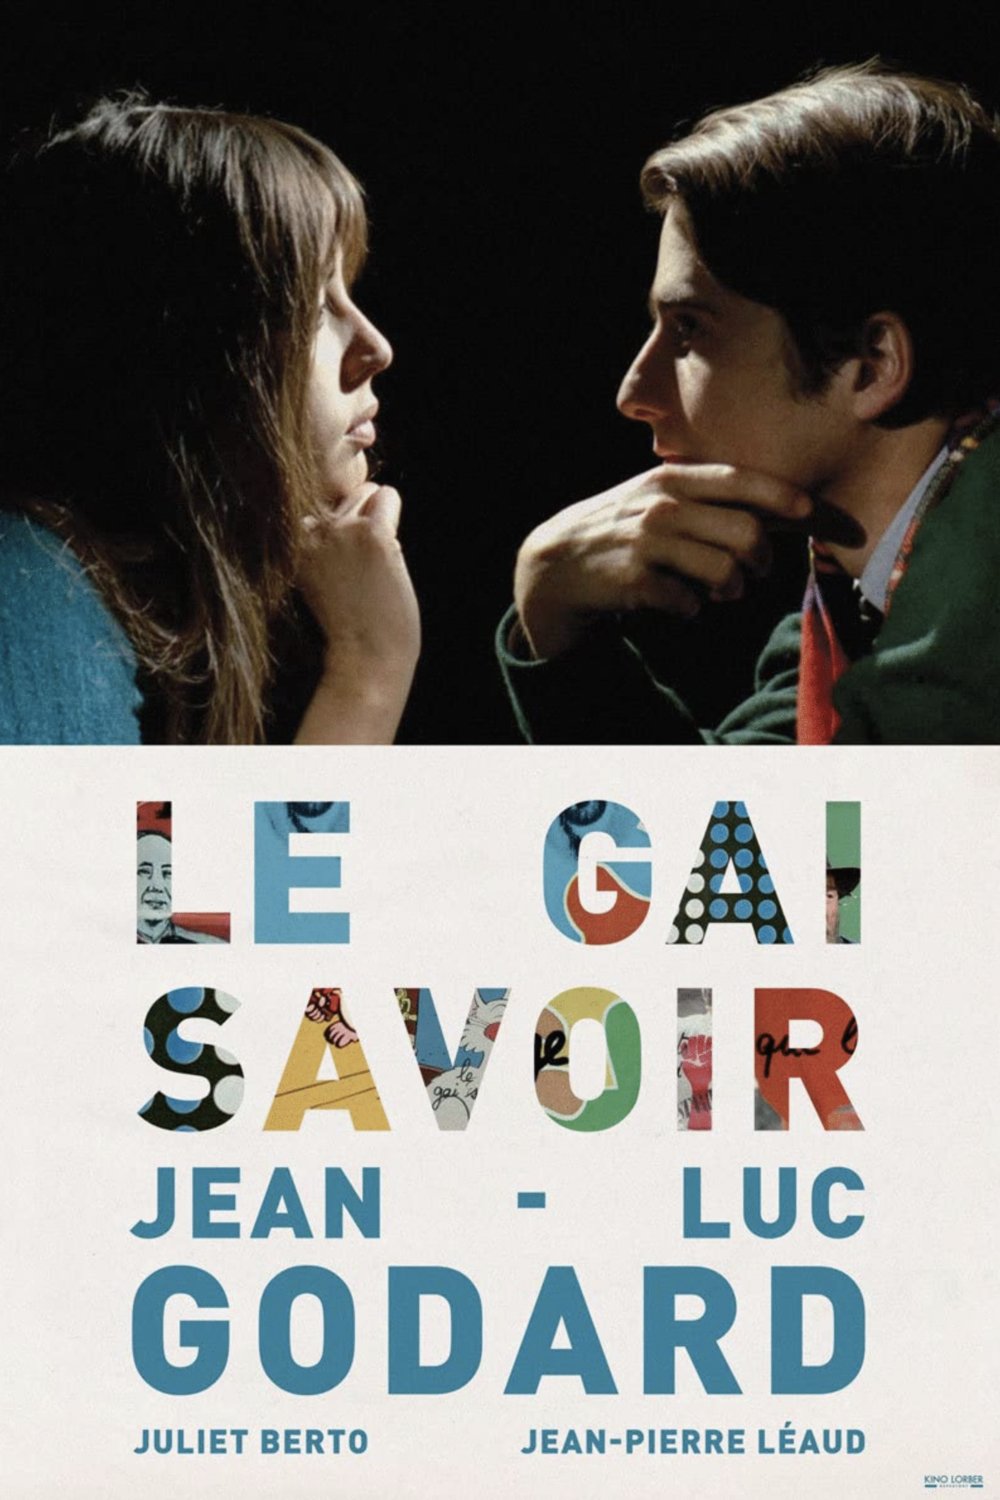 Poster of the movie Le Gai savoir